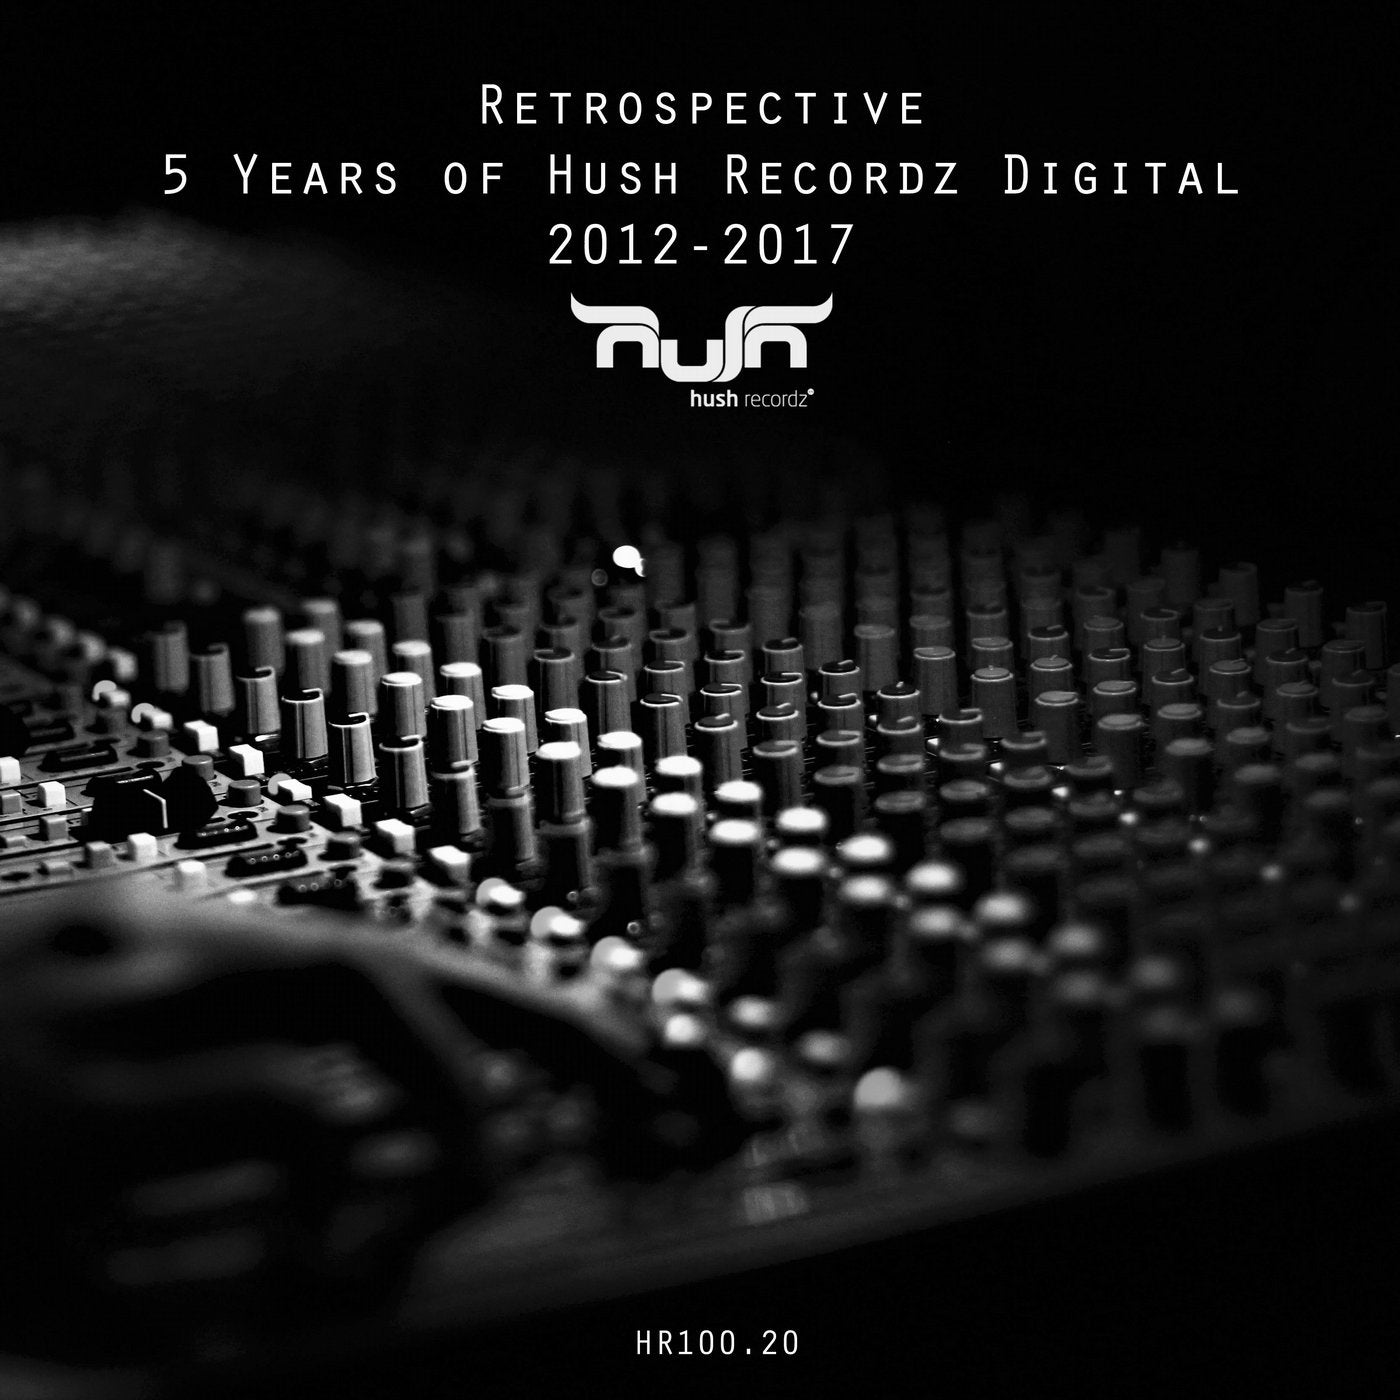 Retrospective - 5 Years of Hush Recordz Digital 2012-2017